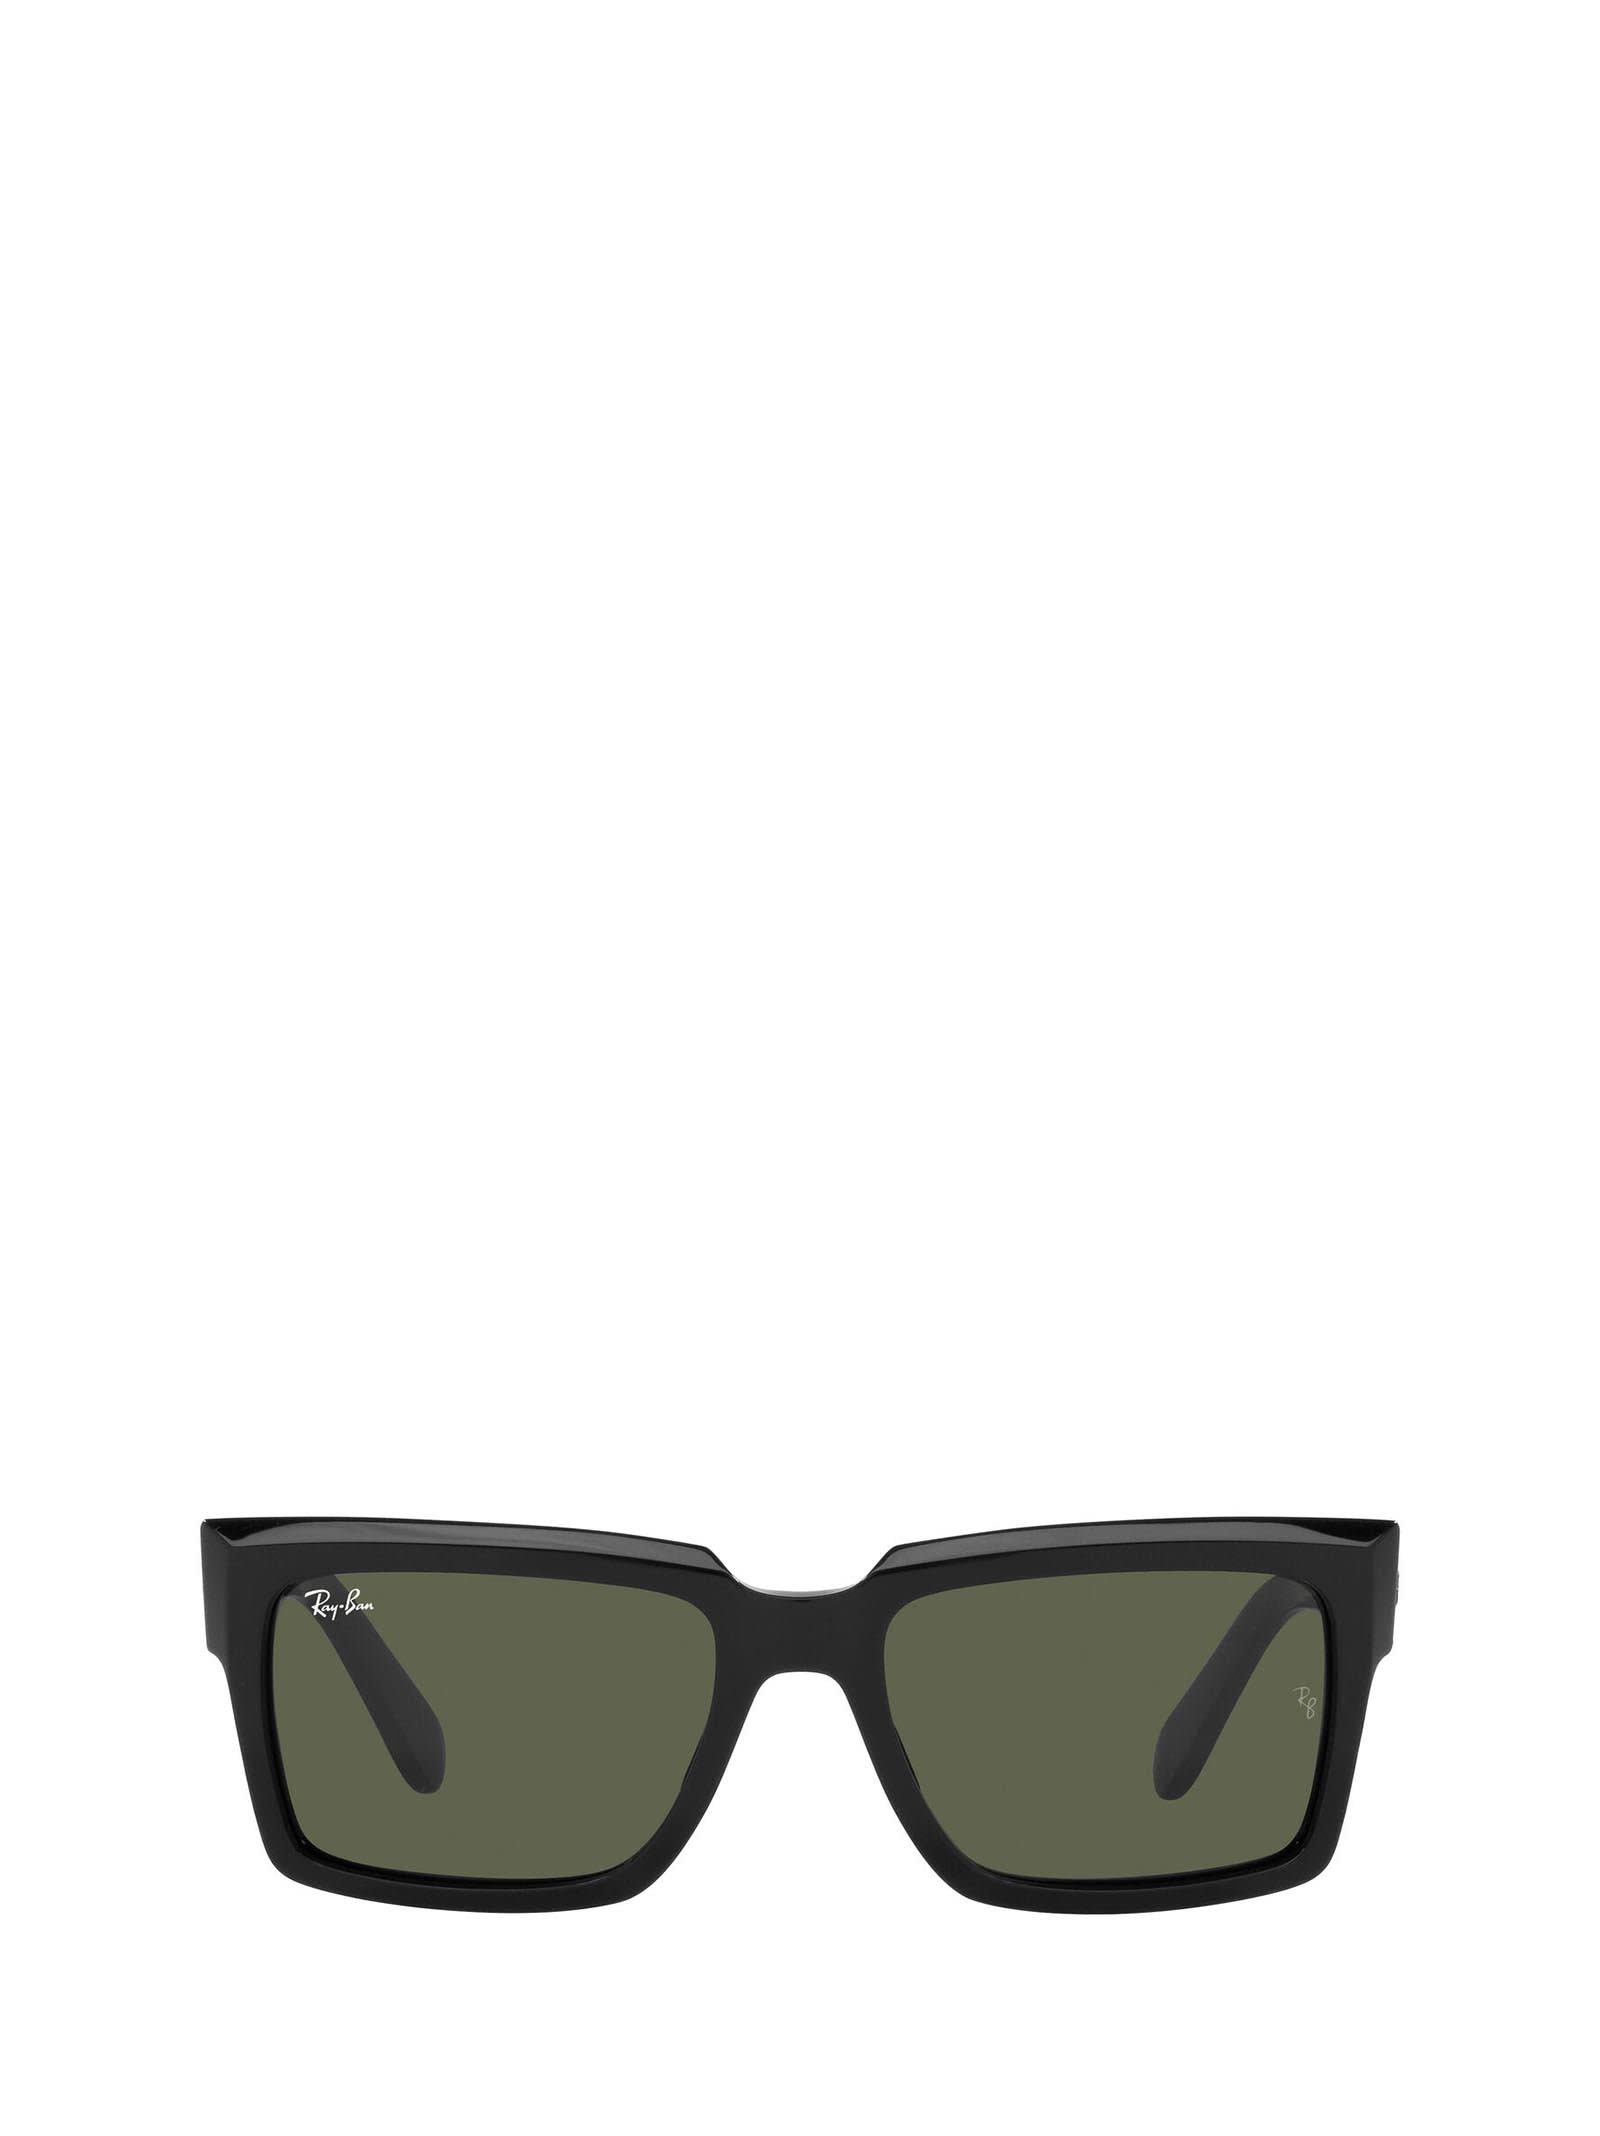 Ray Ban Ray-ban Rb2191 Black Sunglasses